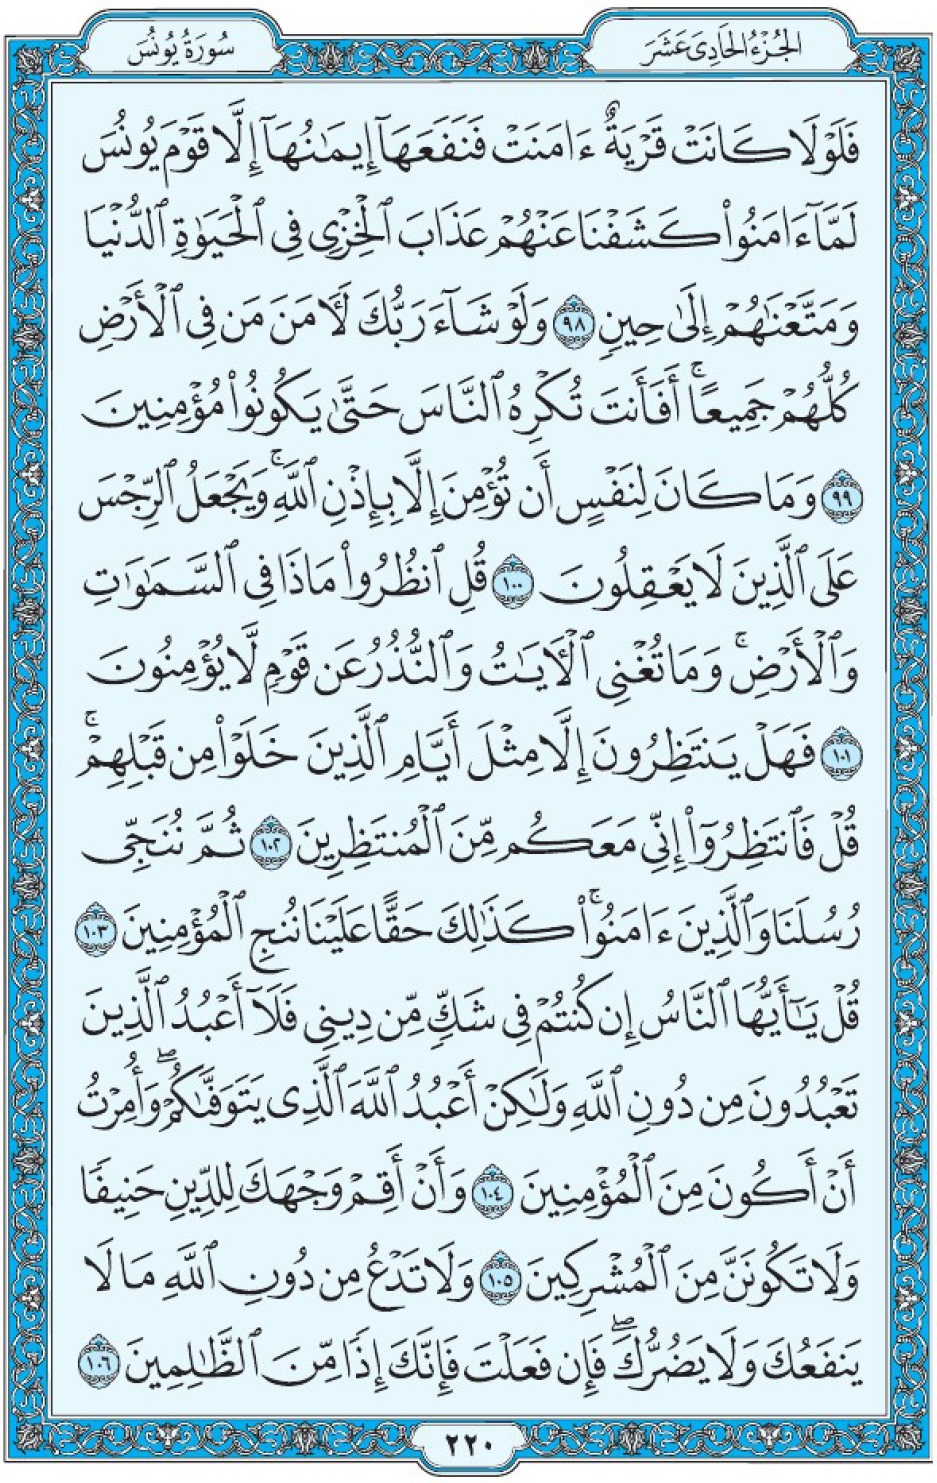 Коран Мединский мусхаф страница 220, Юнус, аят 98-106